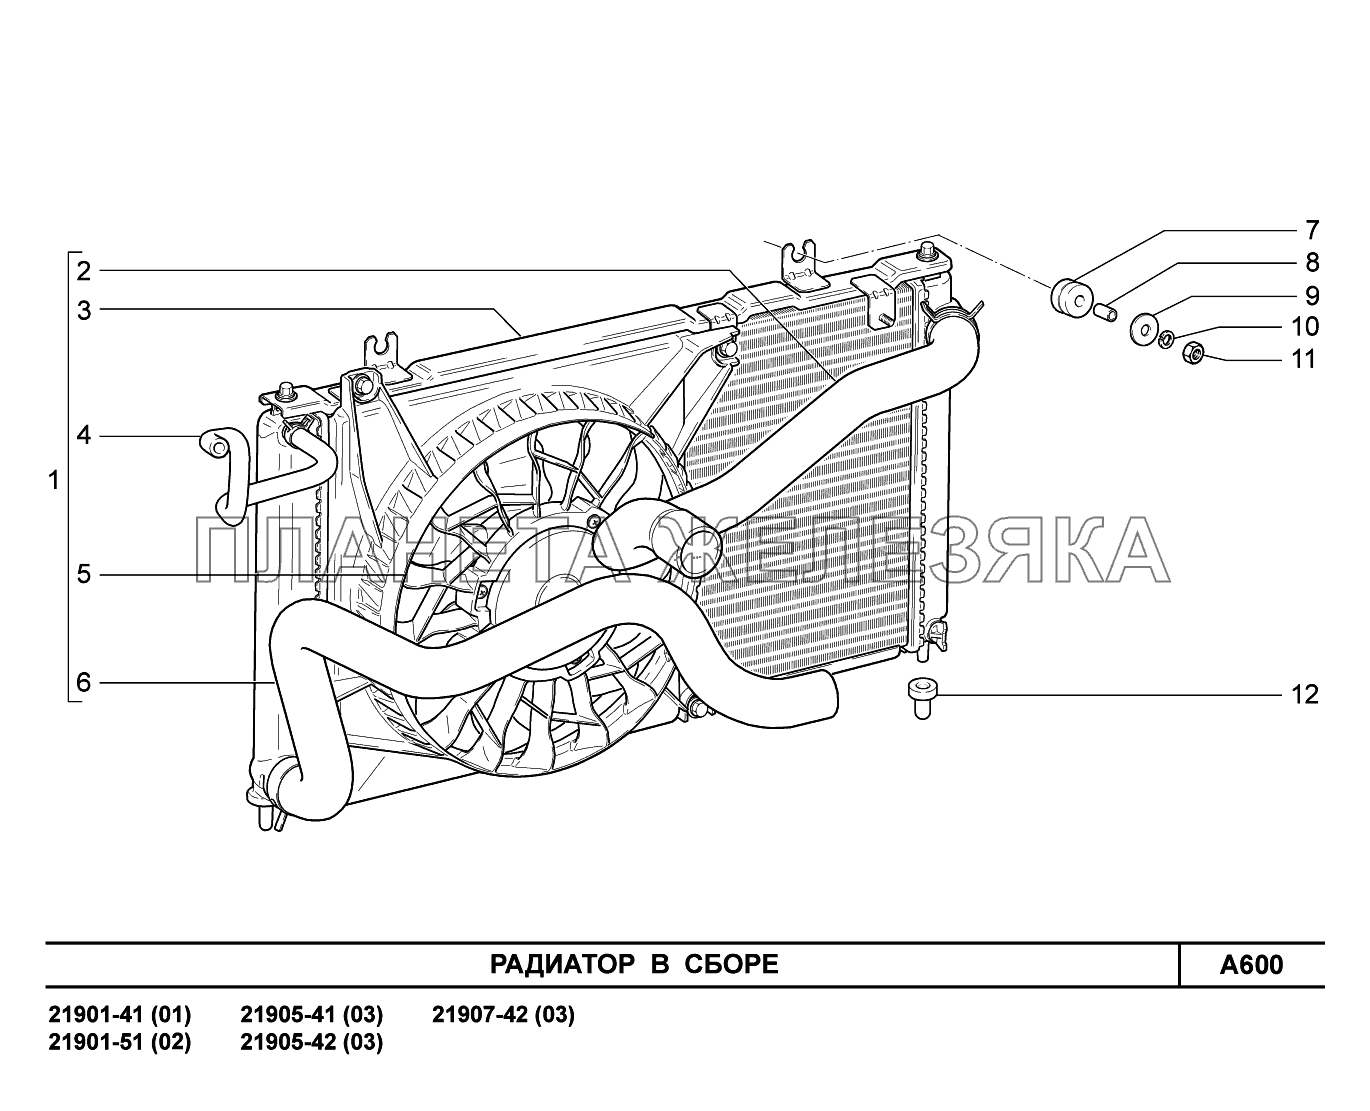 A600. Радиатор в сборе Lada Granta-2190